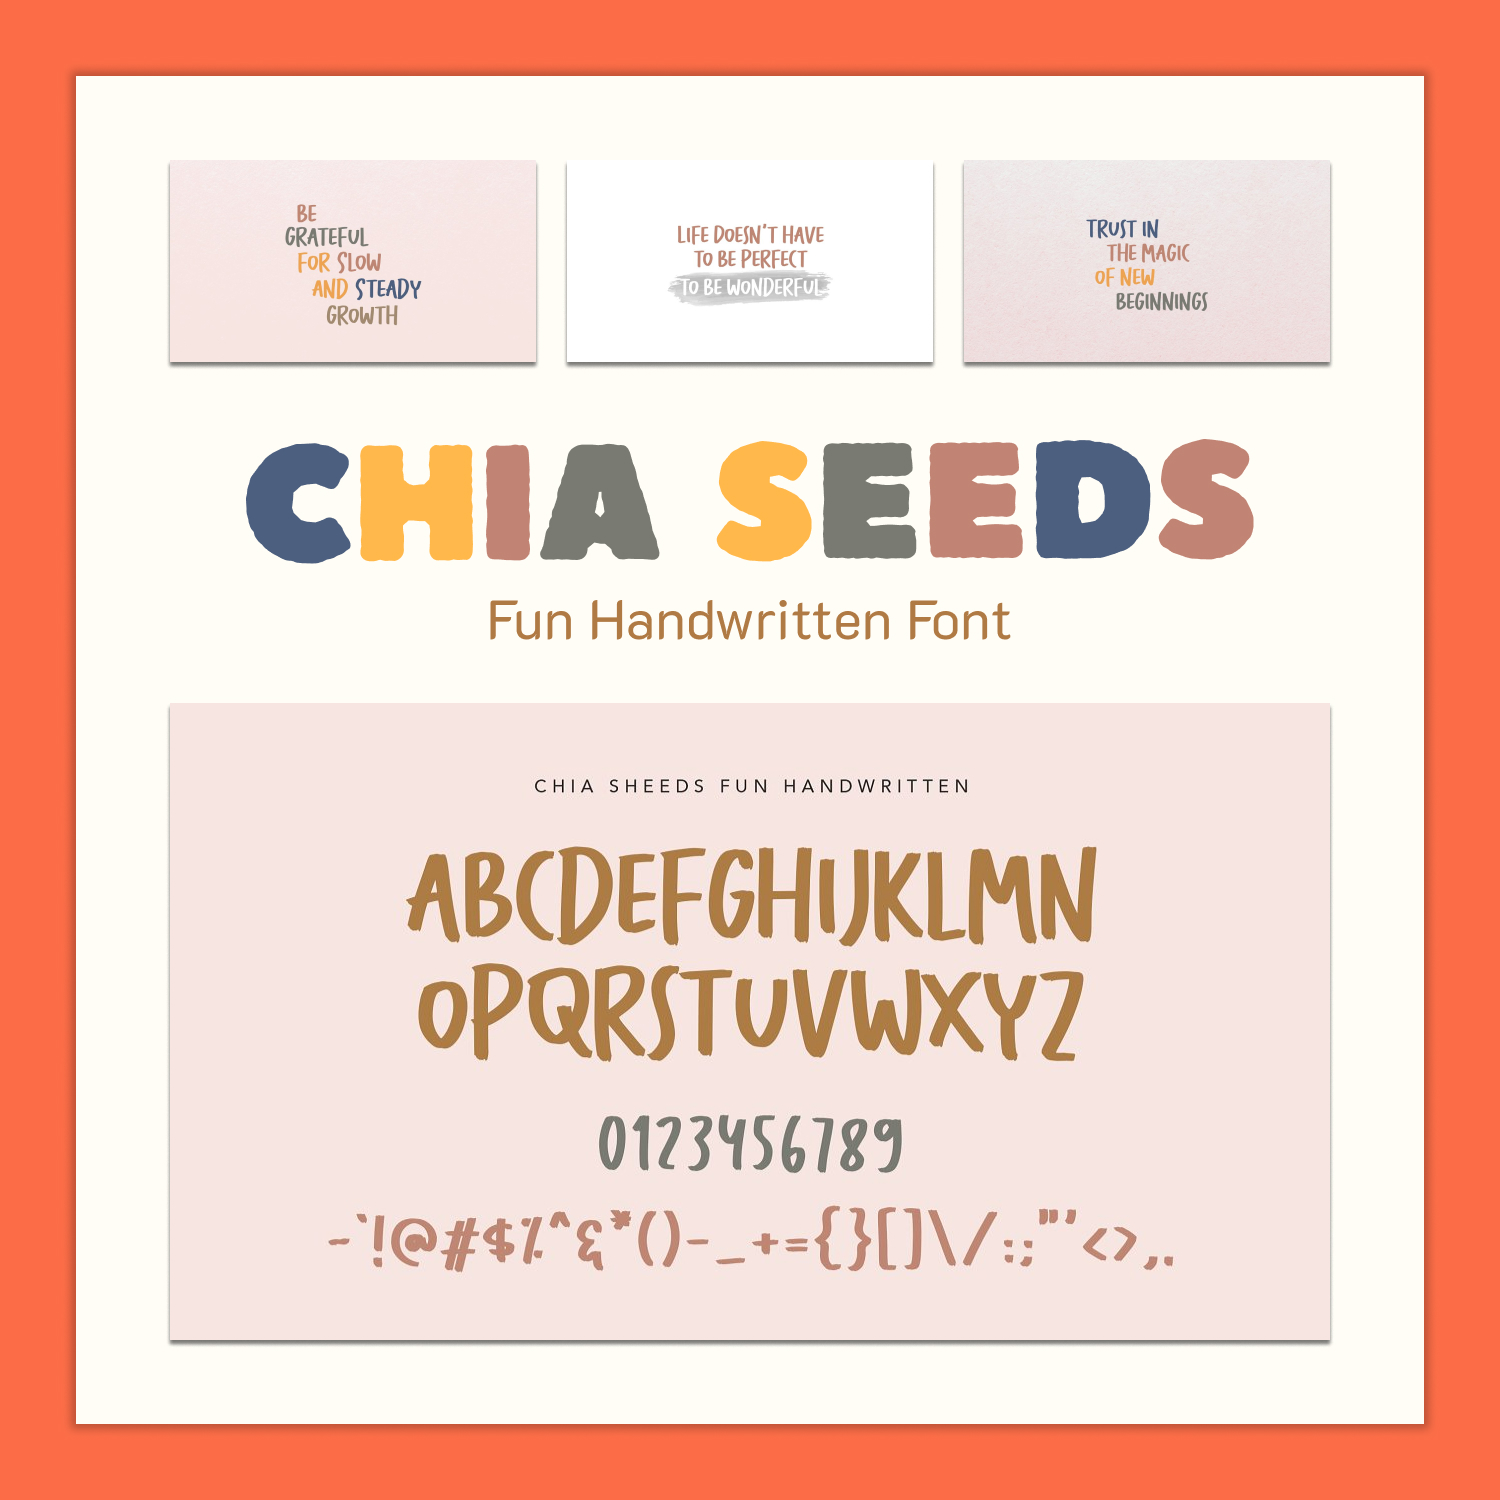 Chia Seeds Fun Handwritten Font.